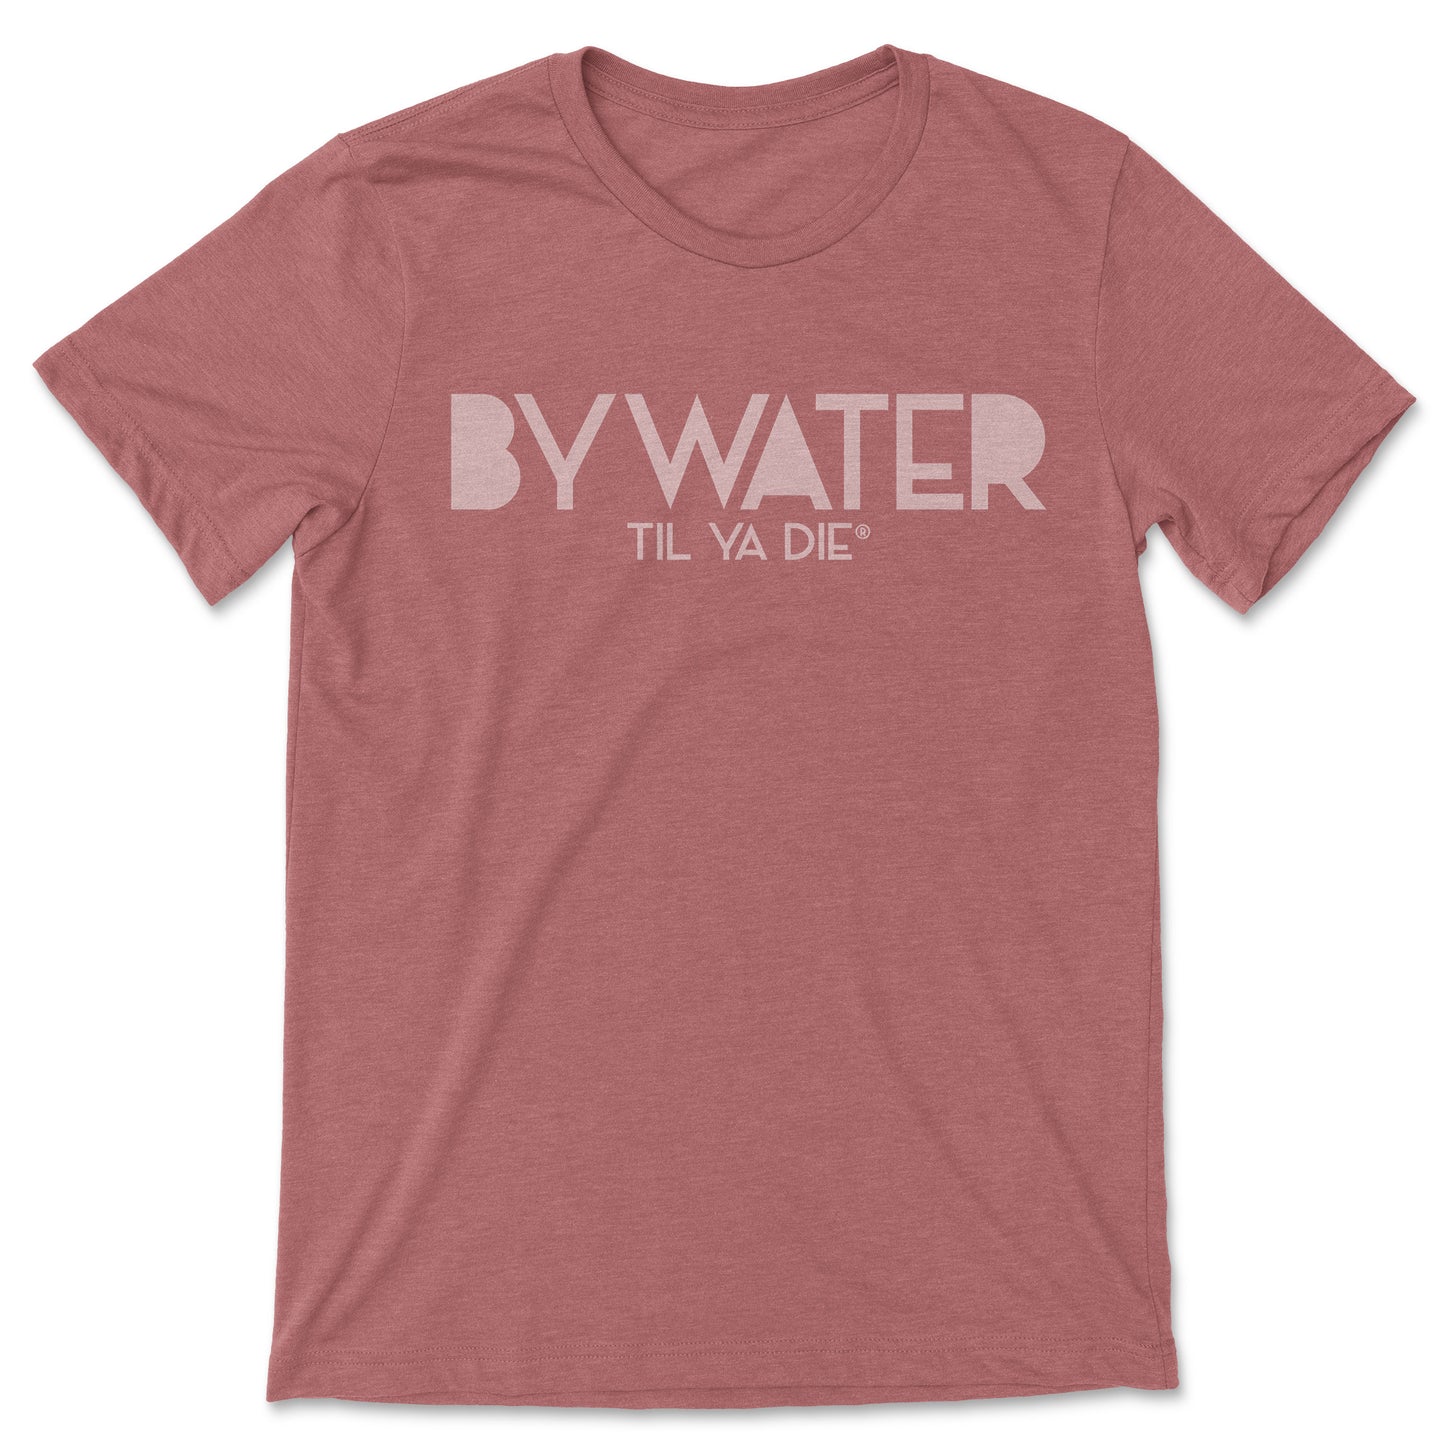 Bywater Til Ya Die T-Shirt